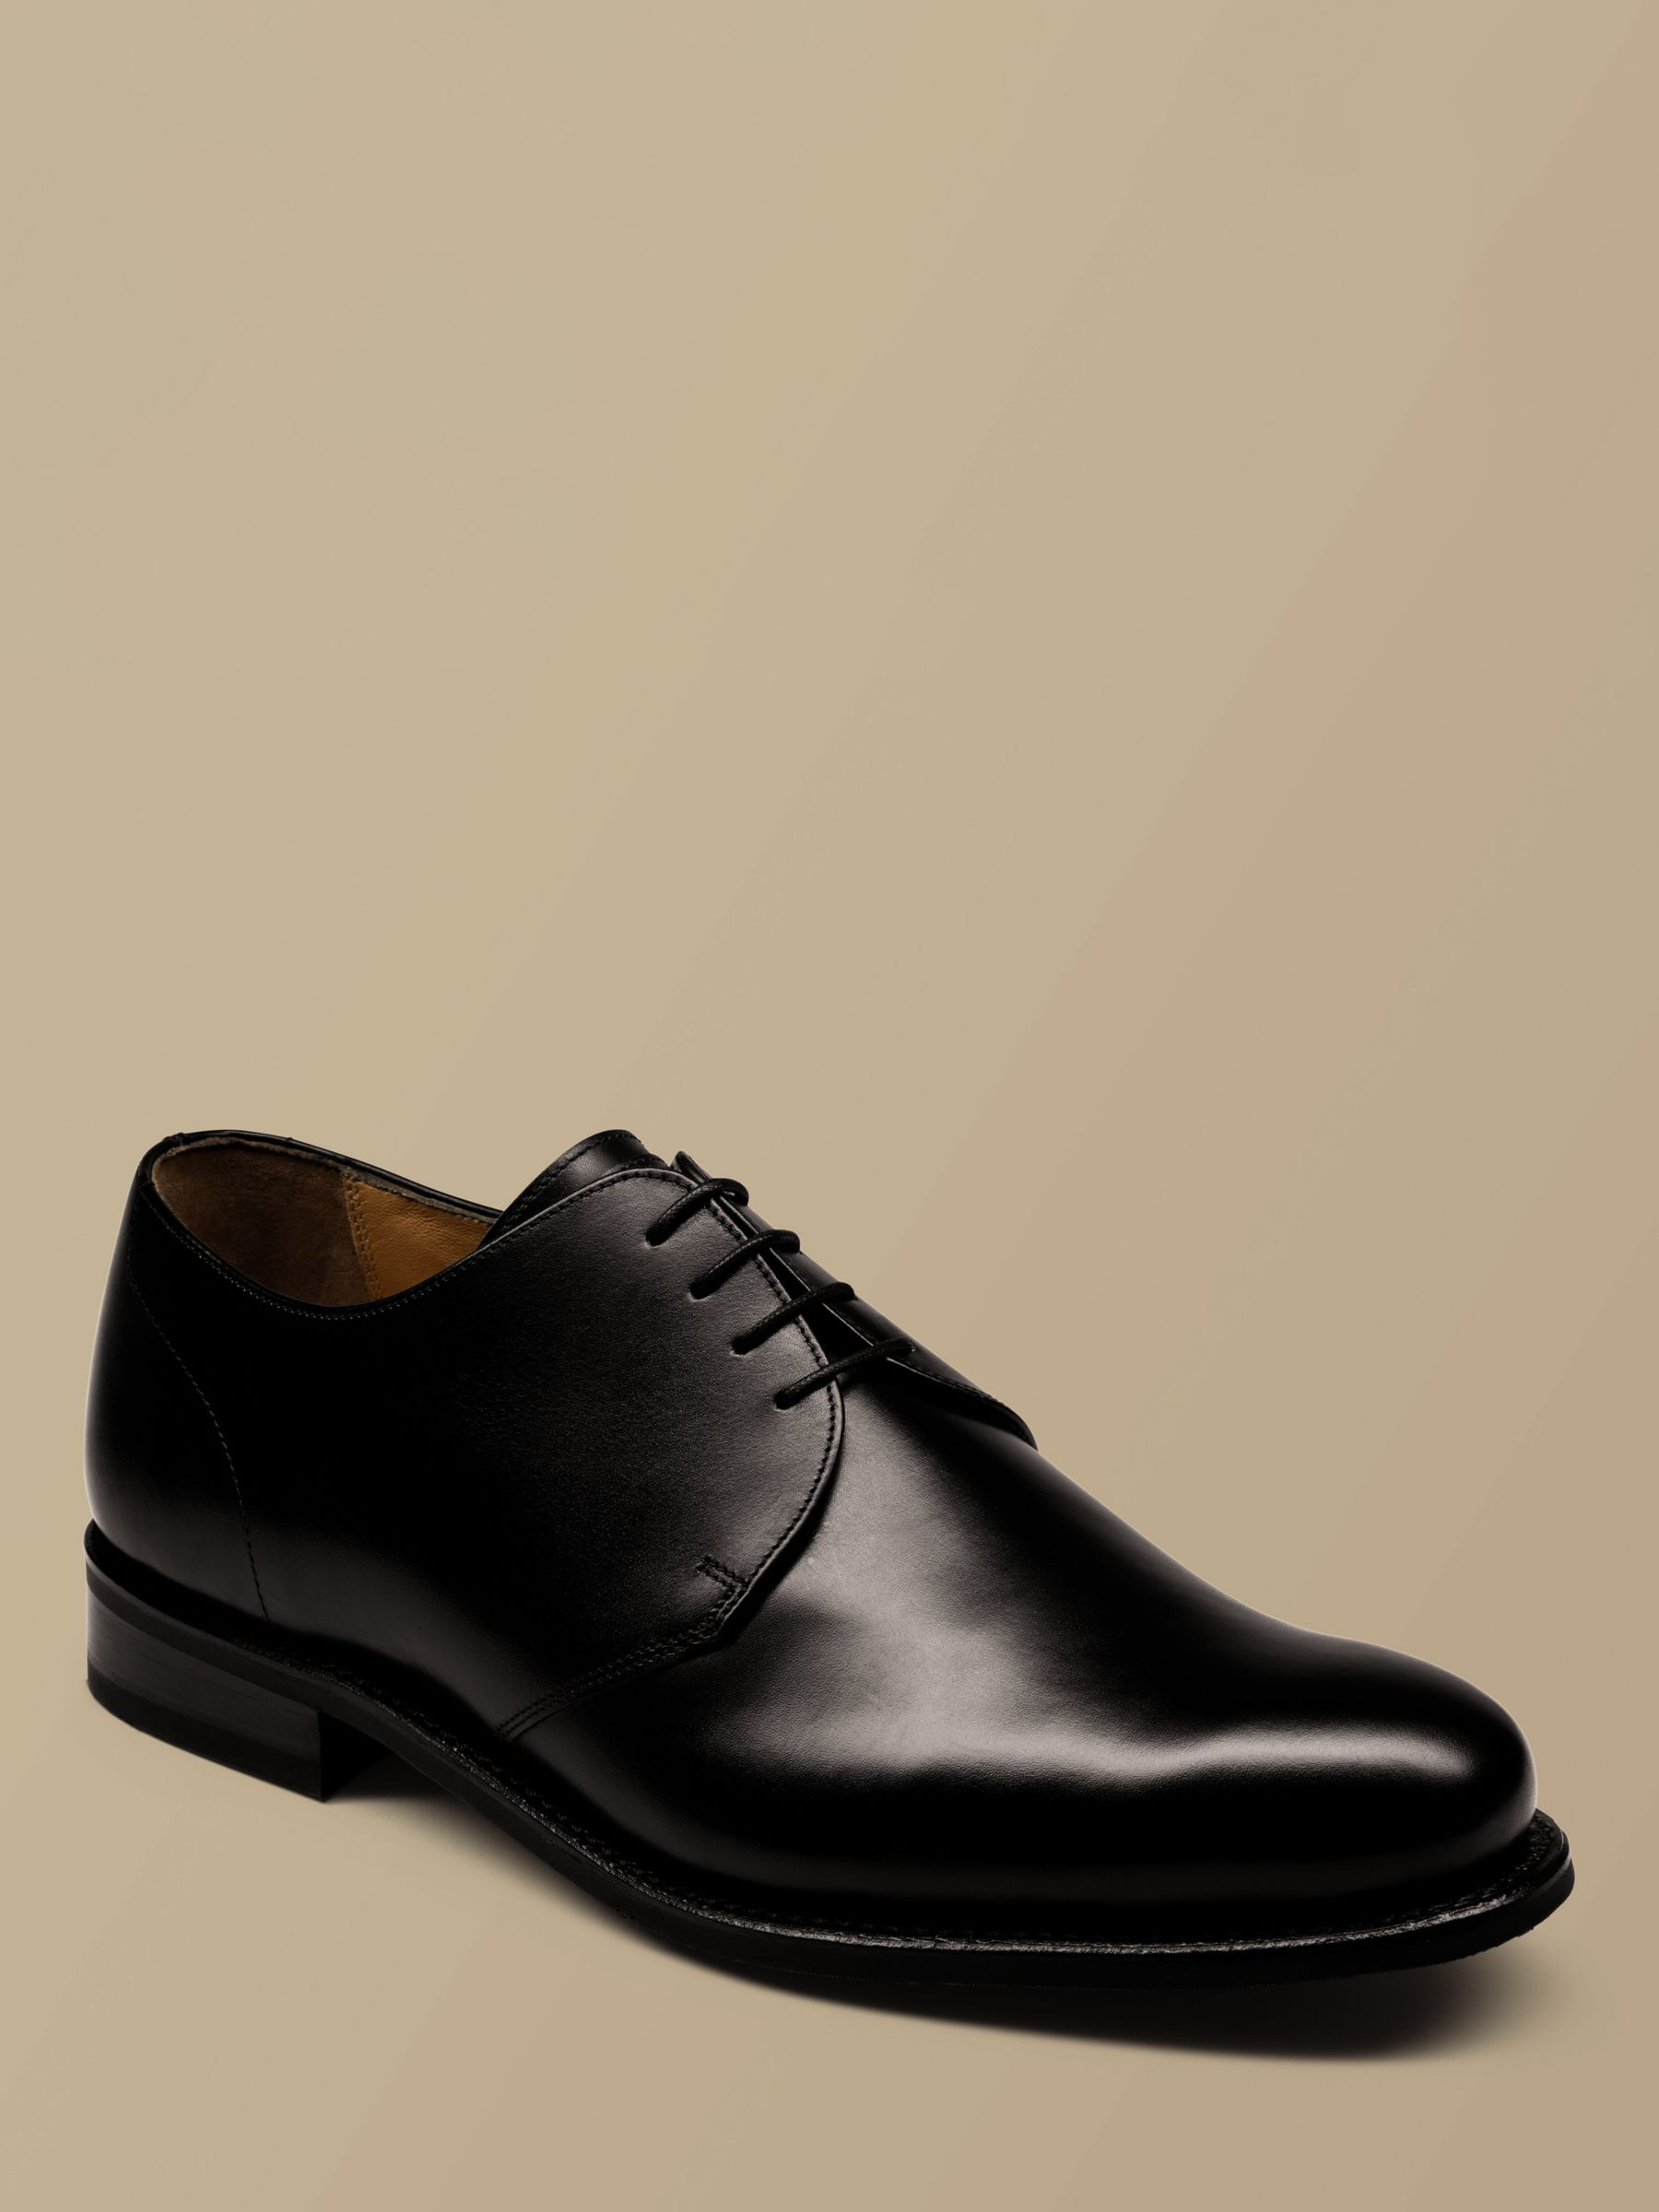 Charles Tyrwhitt Leather Derby Shoes, Black, 11